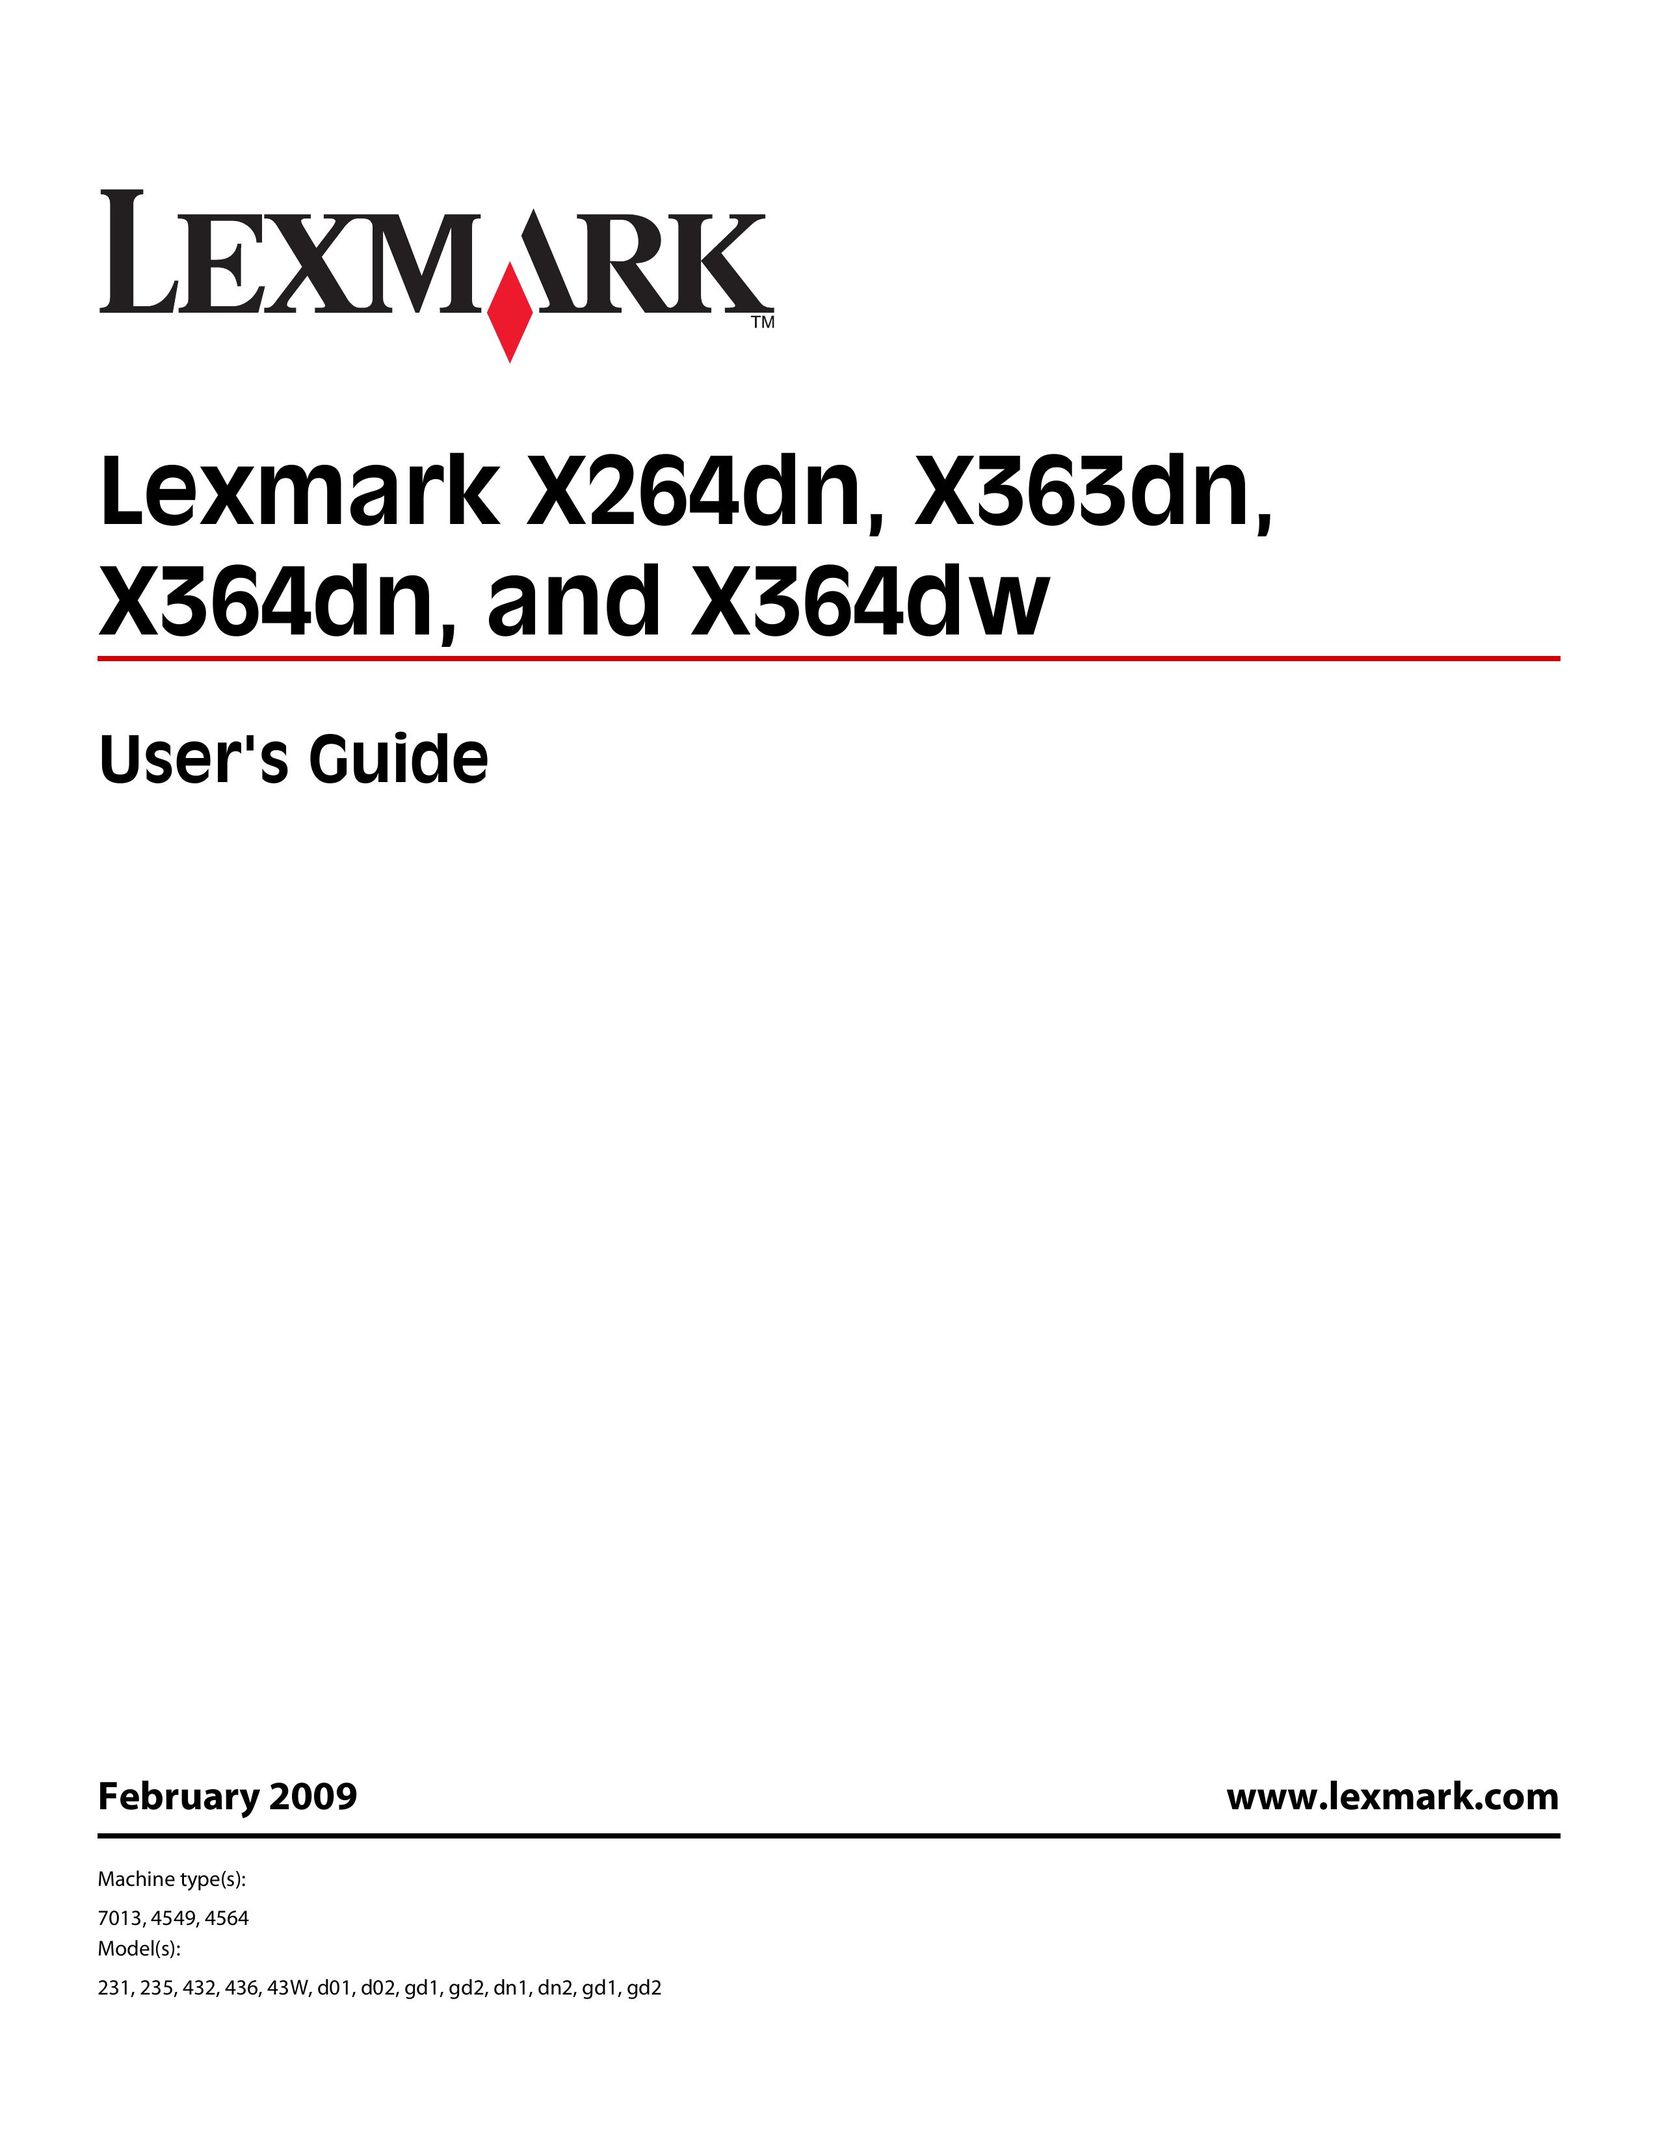 Lexmark 231 All in One Printer User Manual